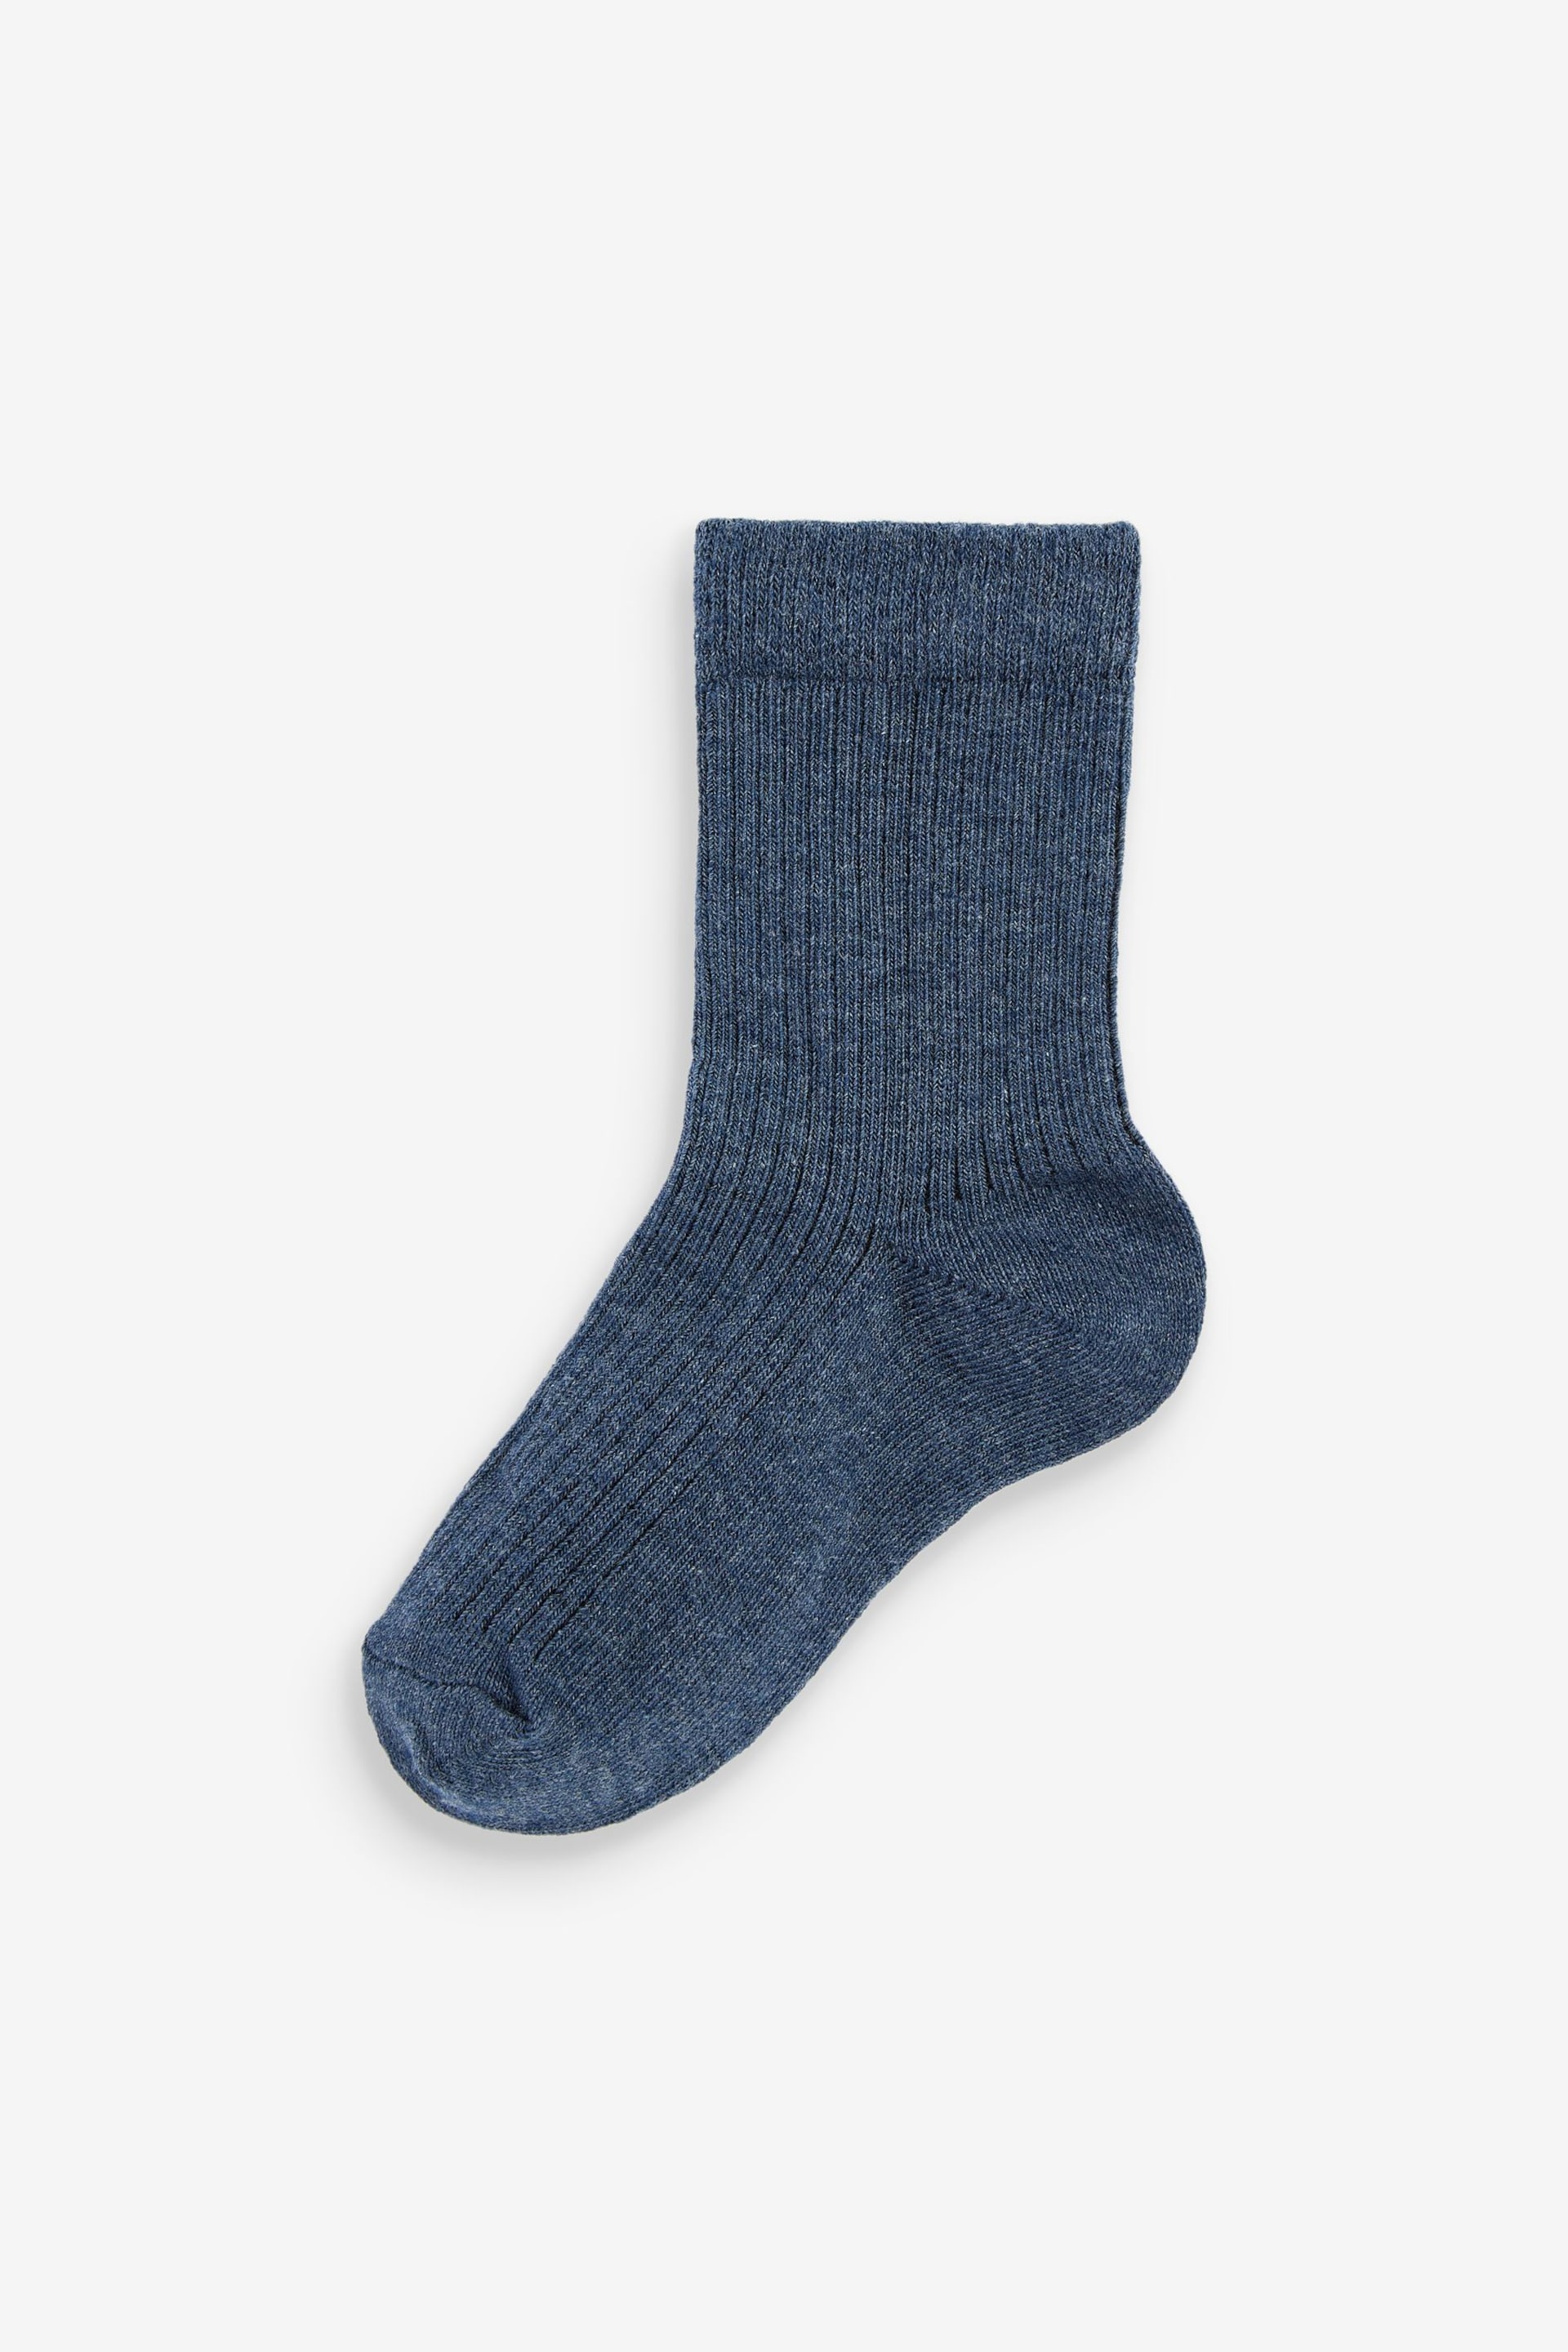 Blue/Navy Cotton Rich Fine Rib Socks 7 Pack - Image 3 of 8